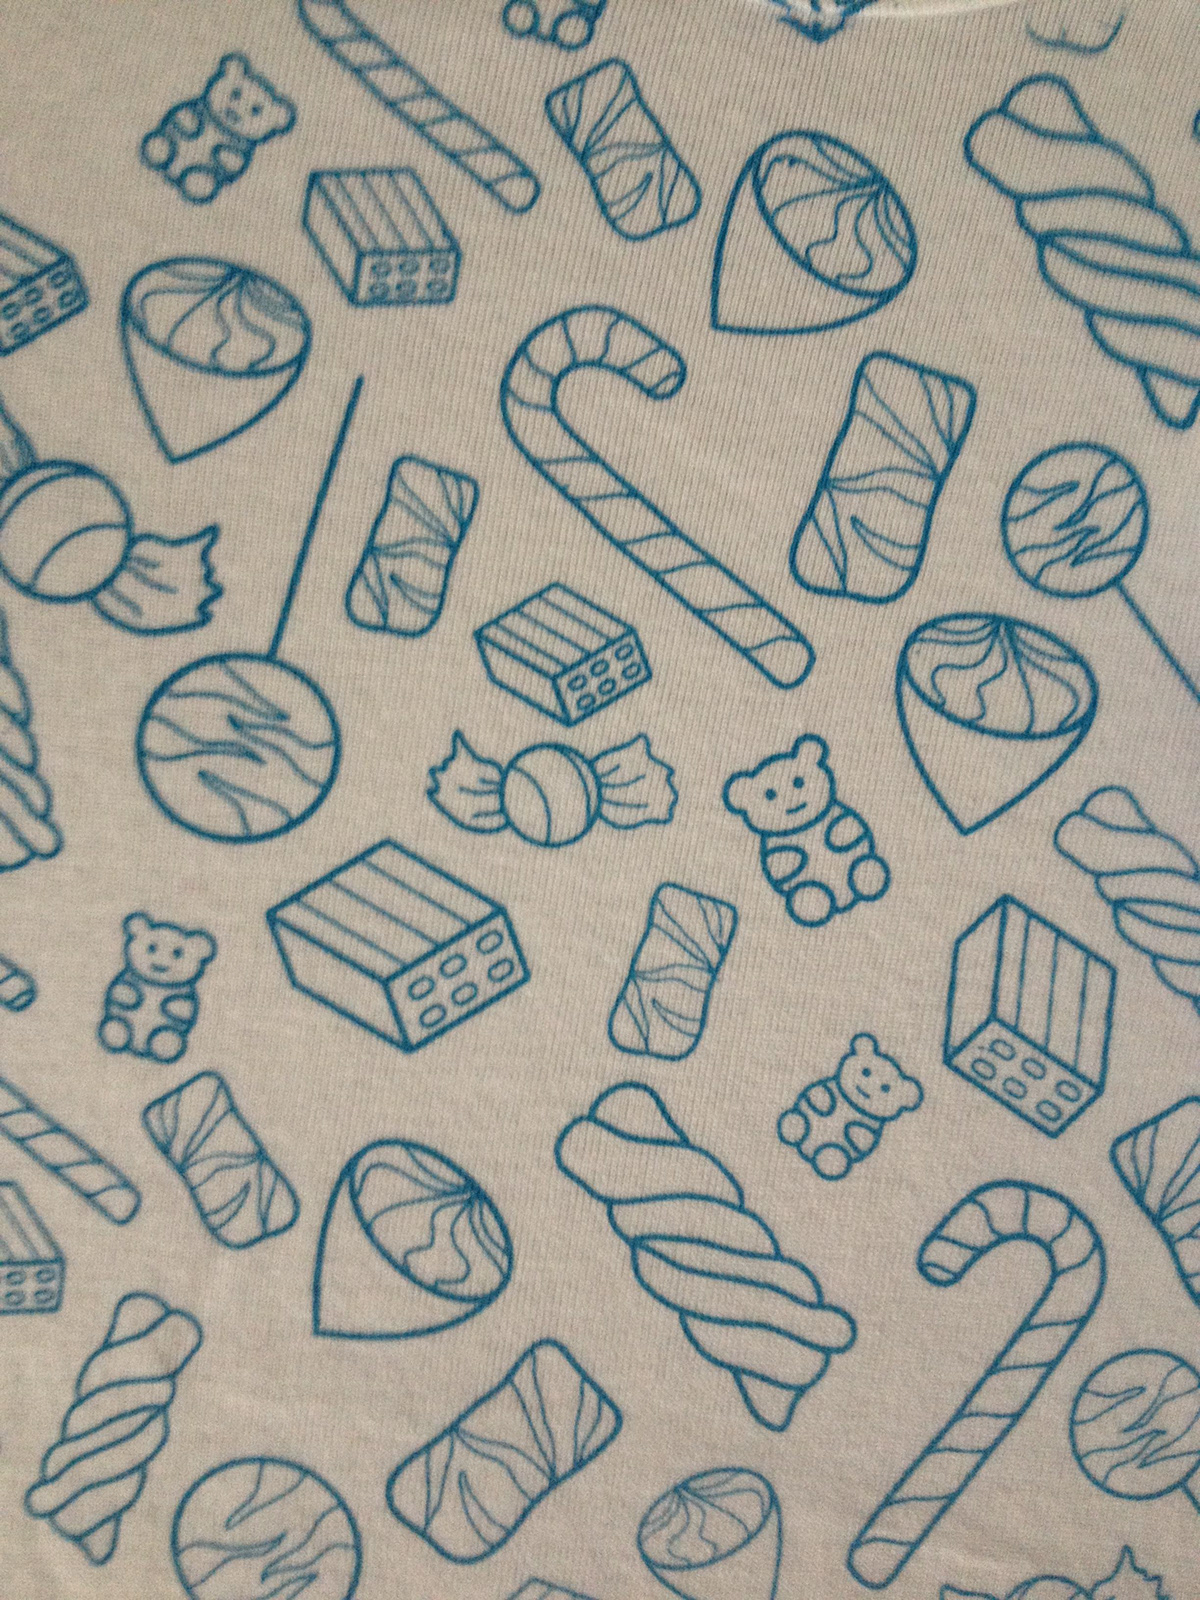 serigrafia textil manual ilustracion chucherias Candy